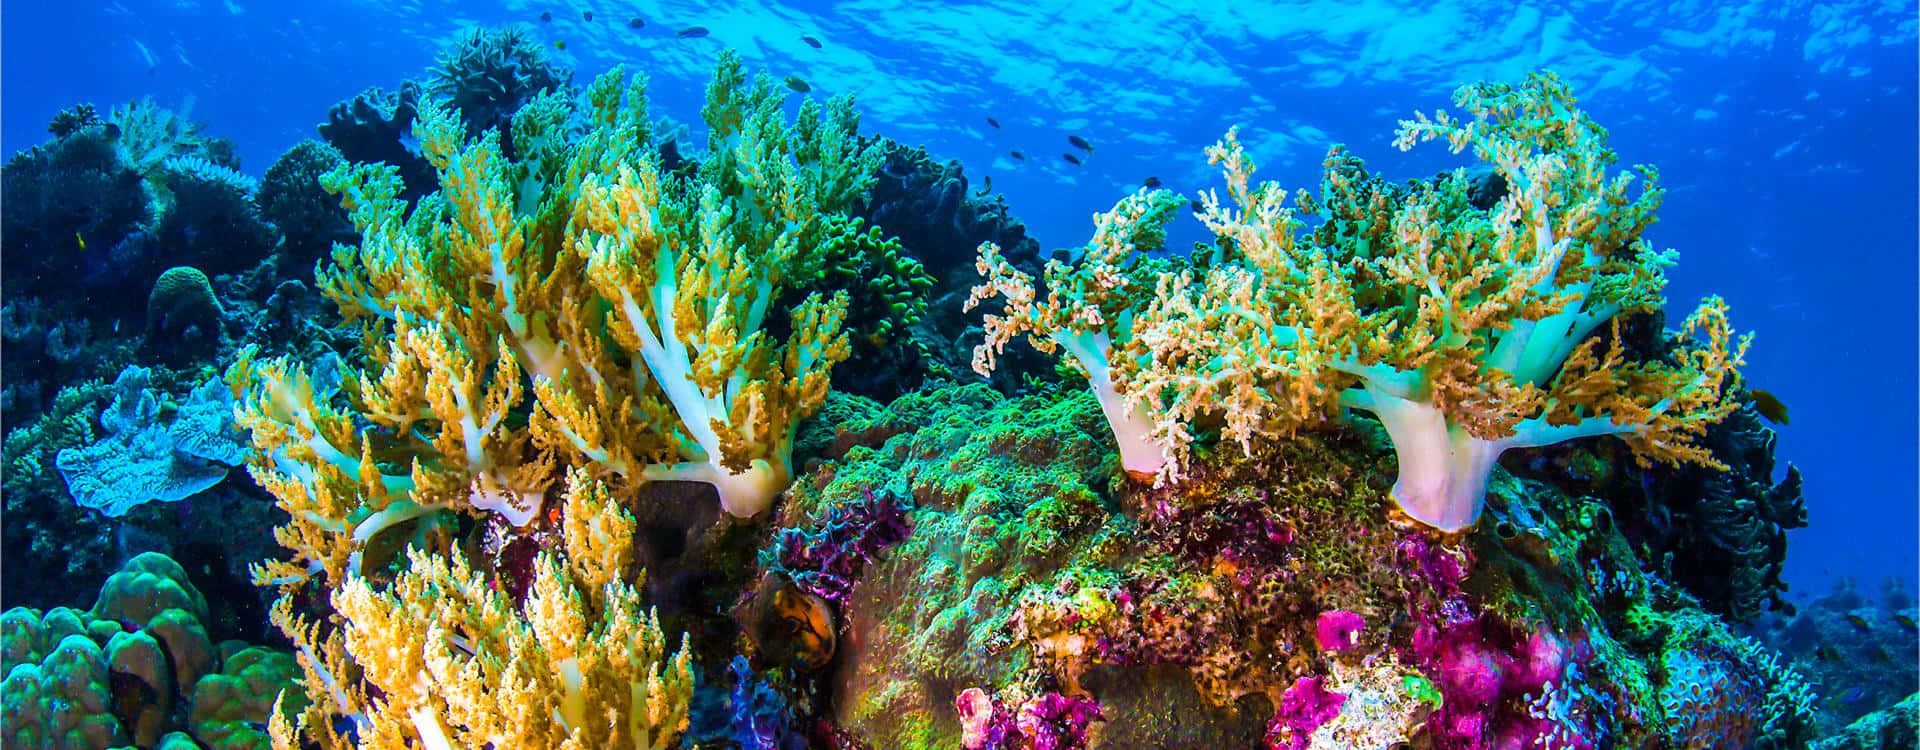 Vibrant Underwater Paradise